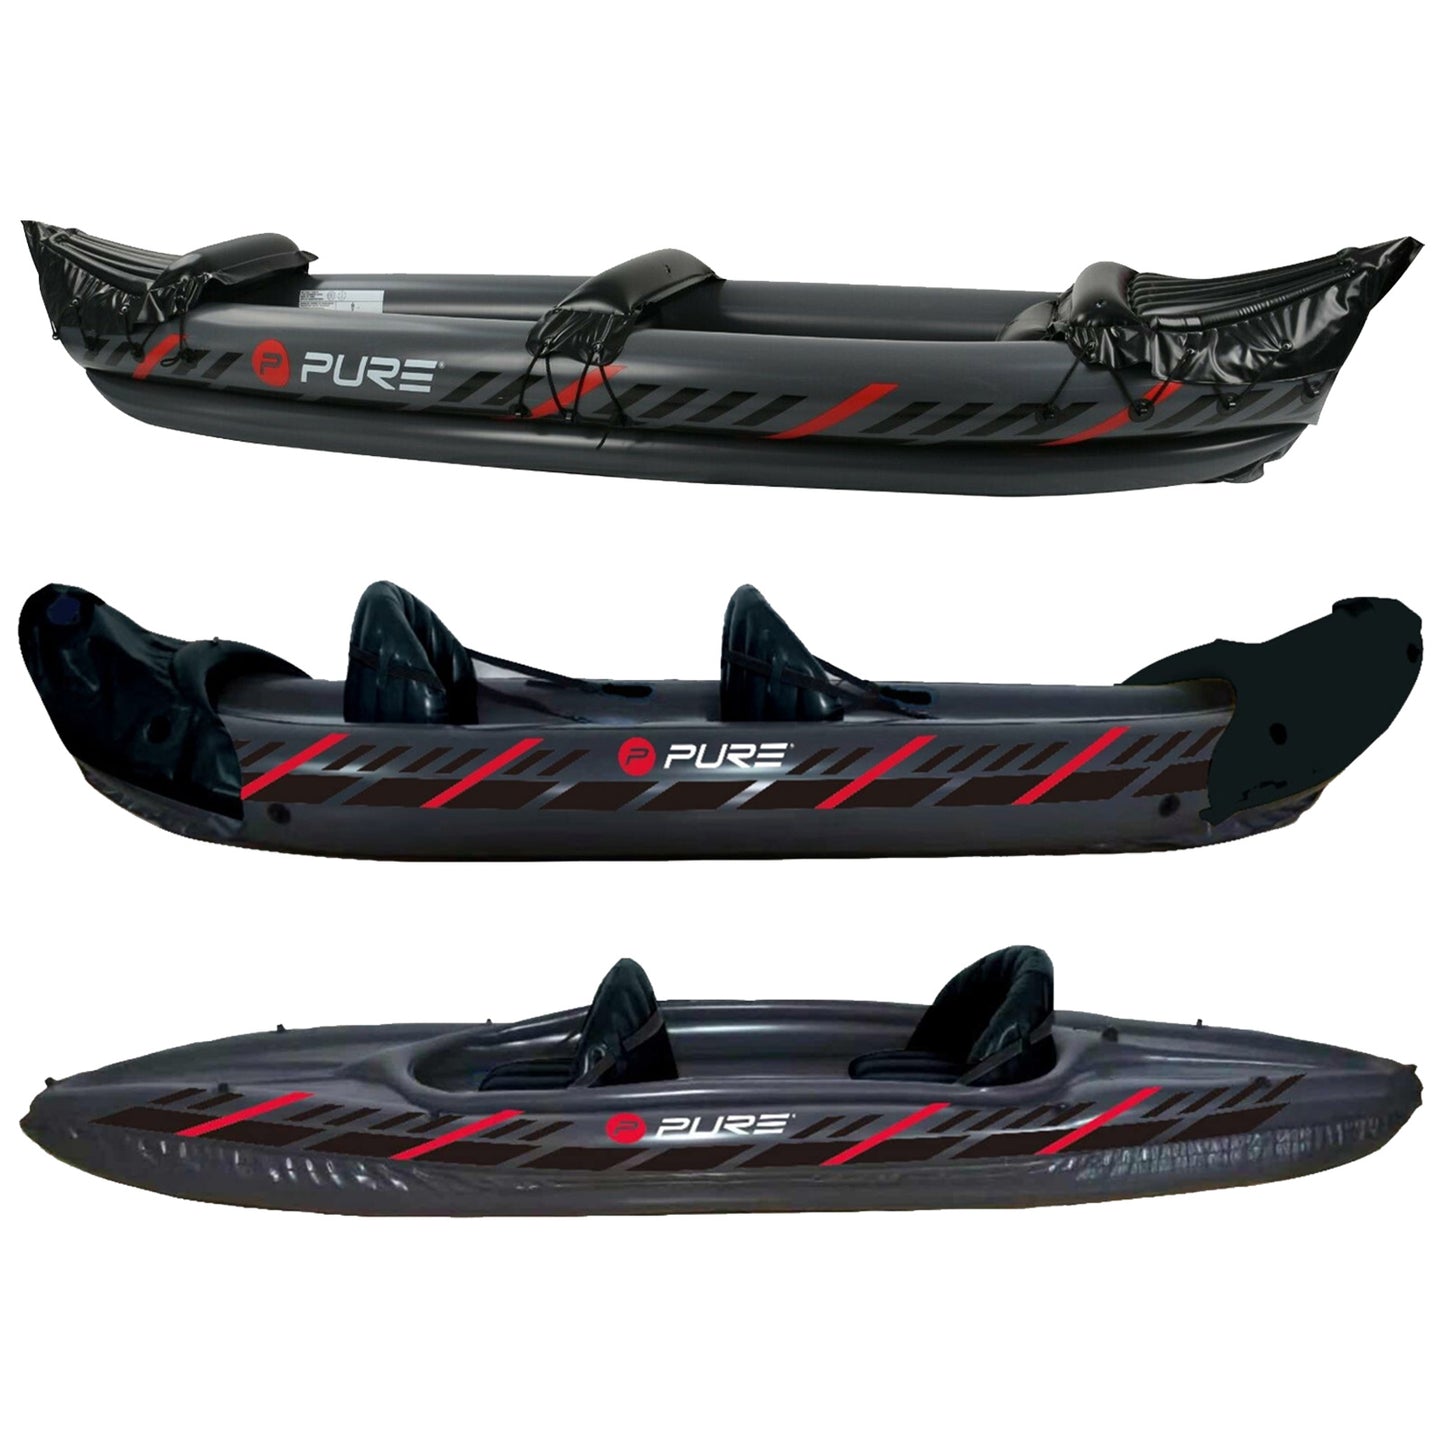 Pure4Fun Inflatable XPRO Kayaks